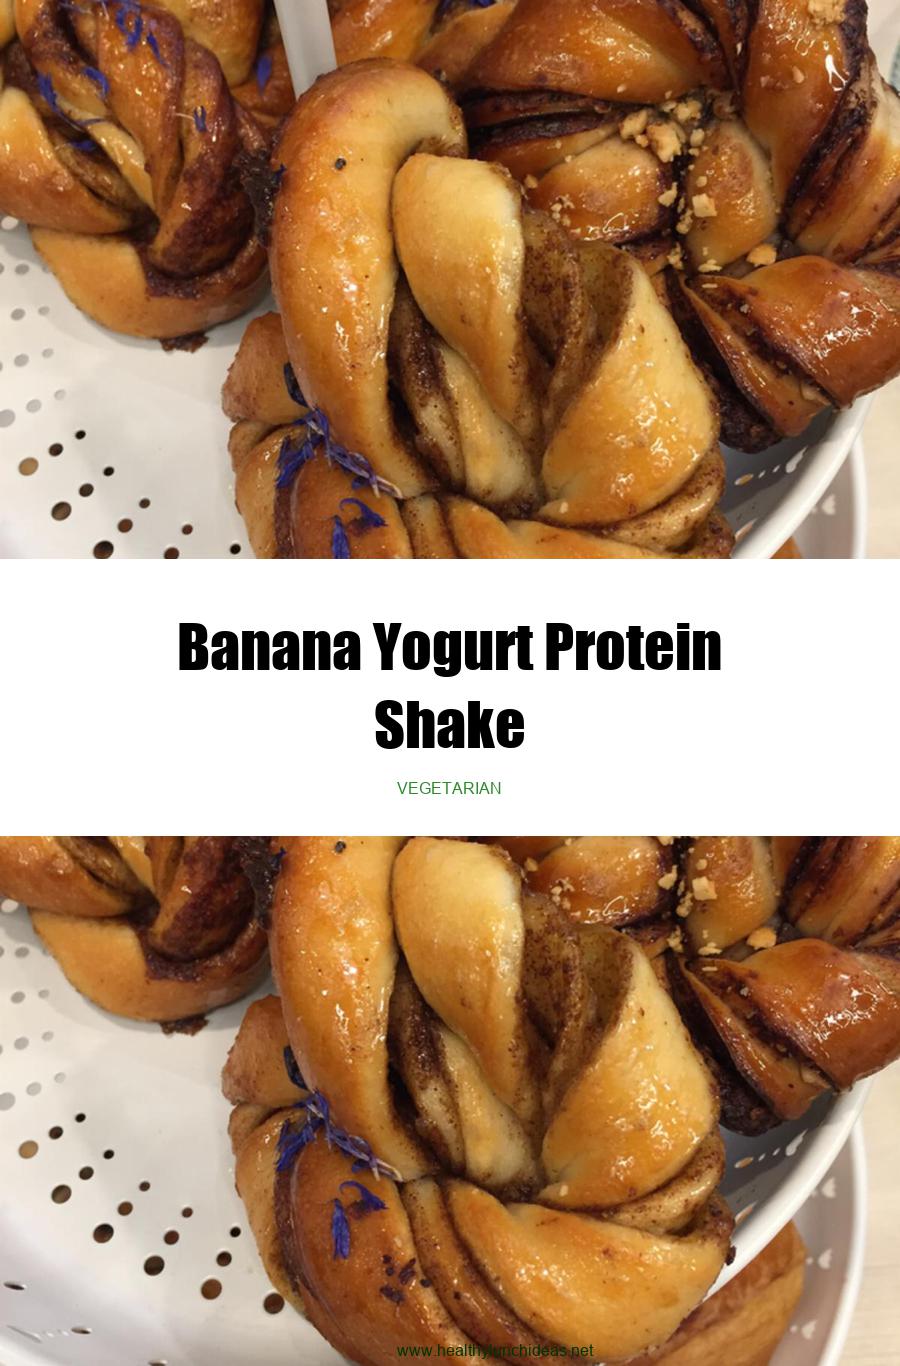 Healthy Recipes: Banana Yogurt Protein Shake Recipe